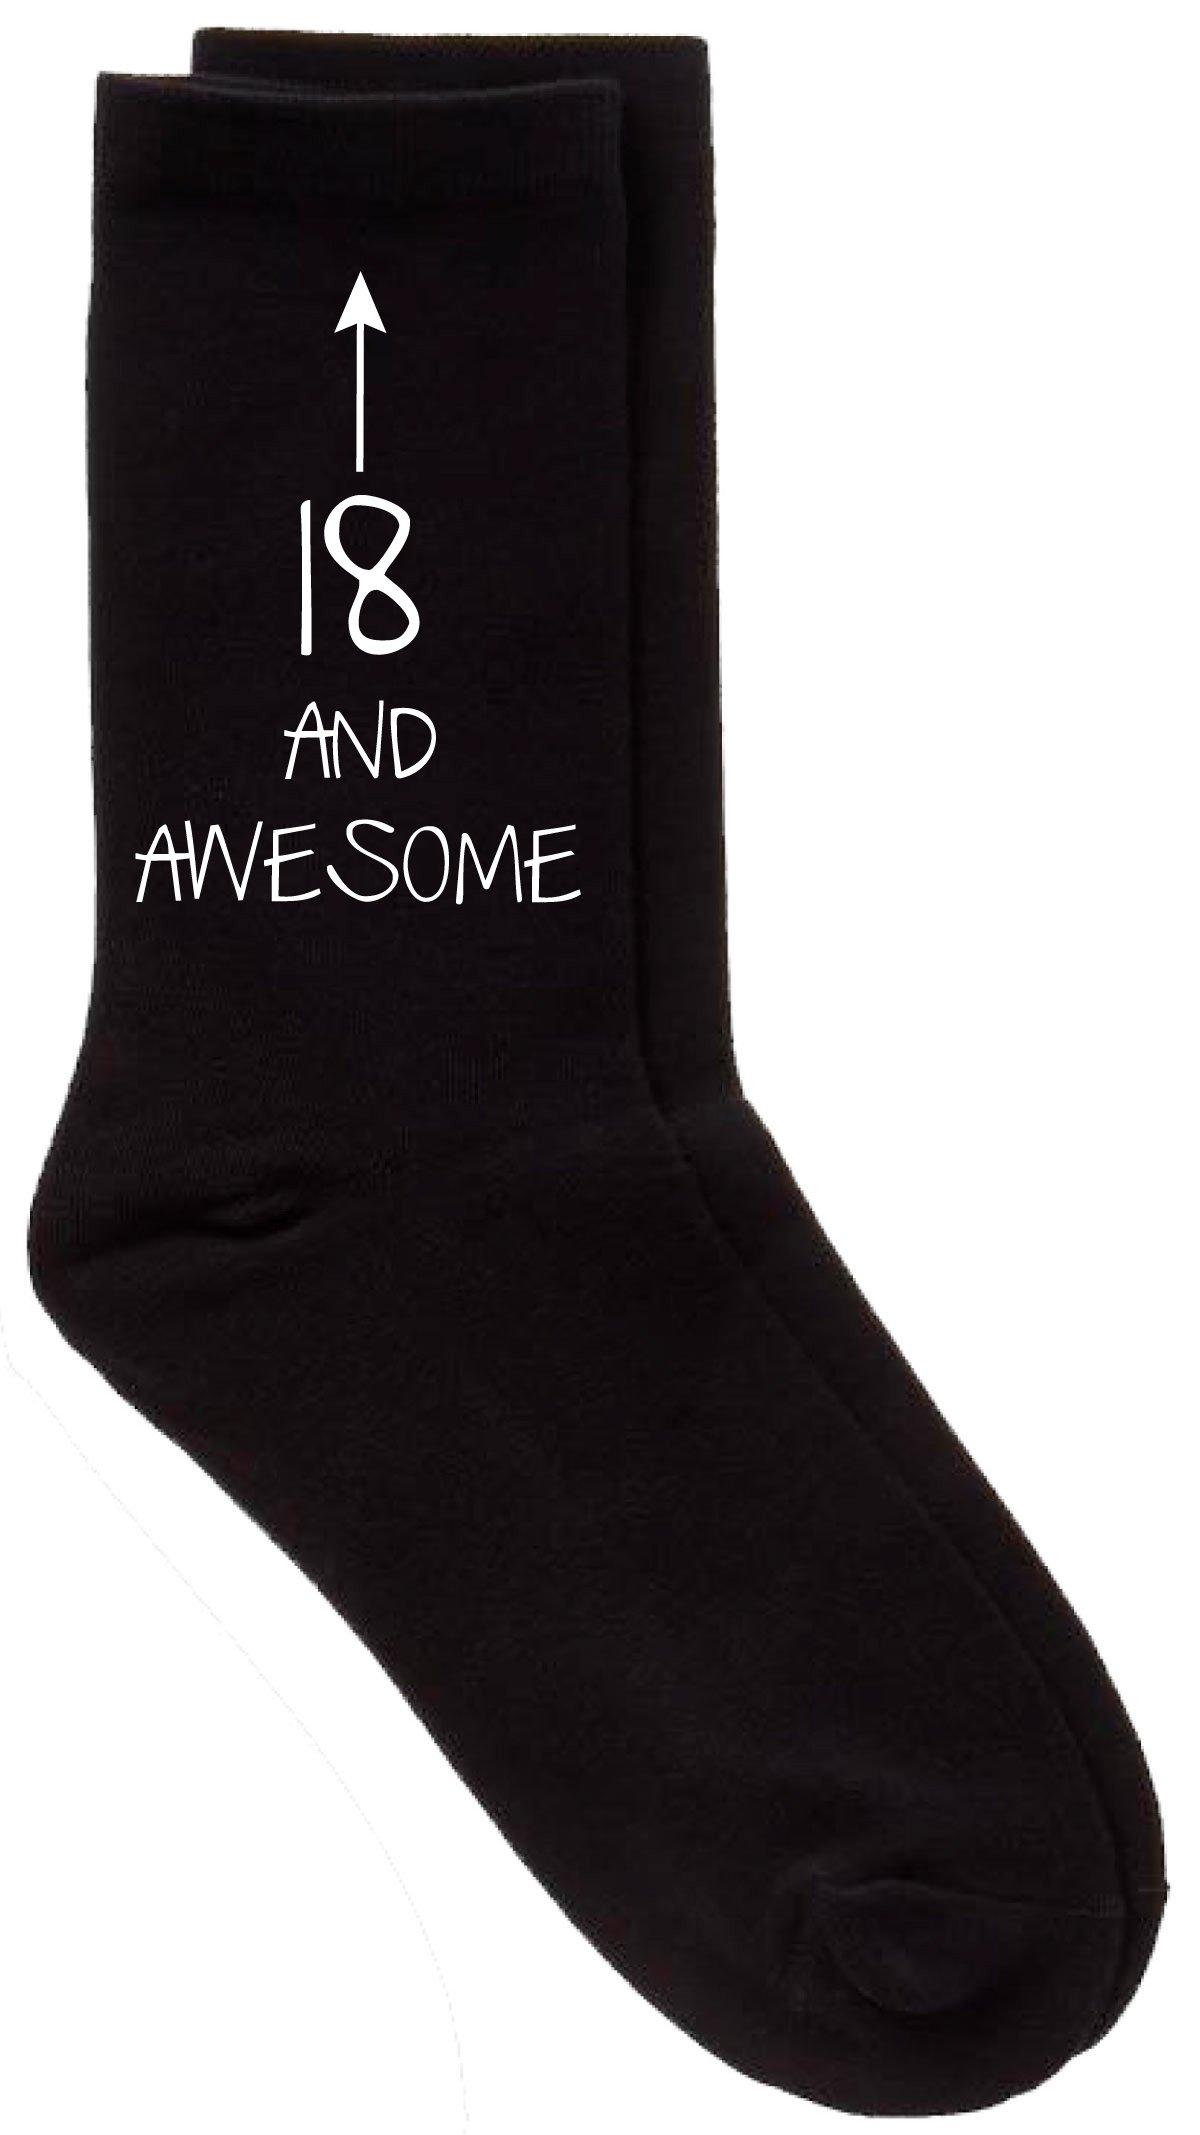 18 and Awesome Black Calf Socks